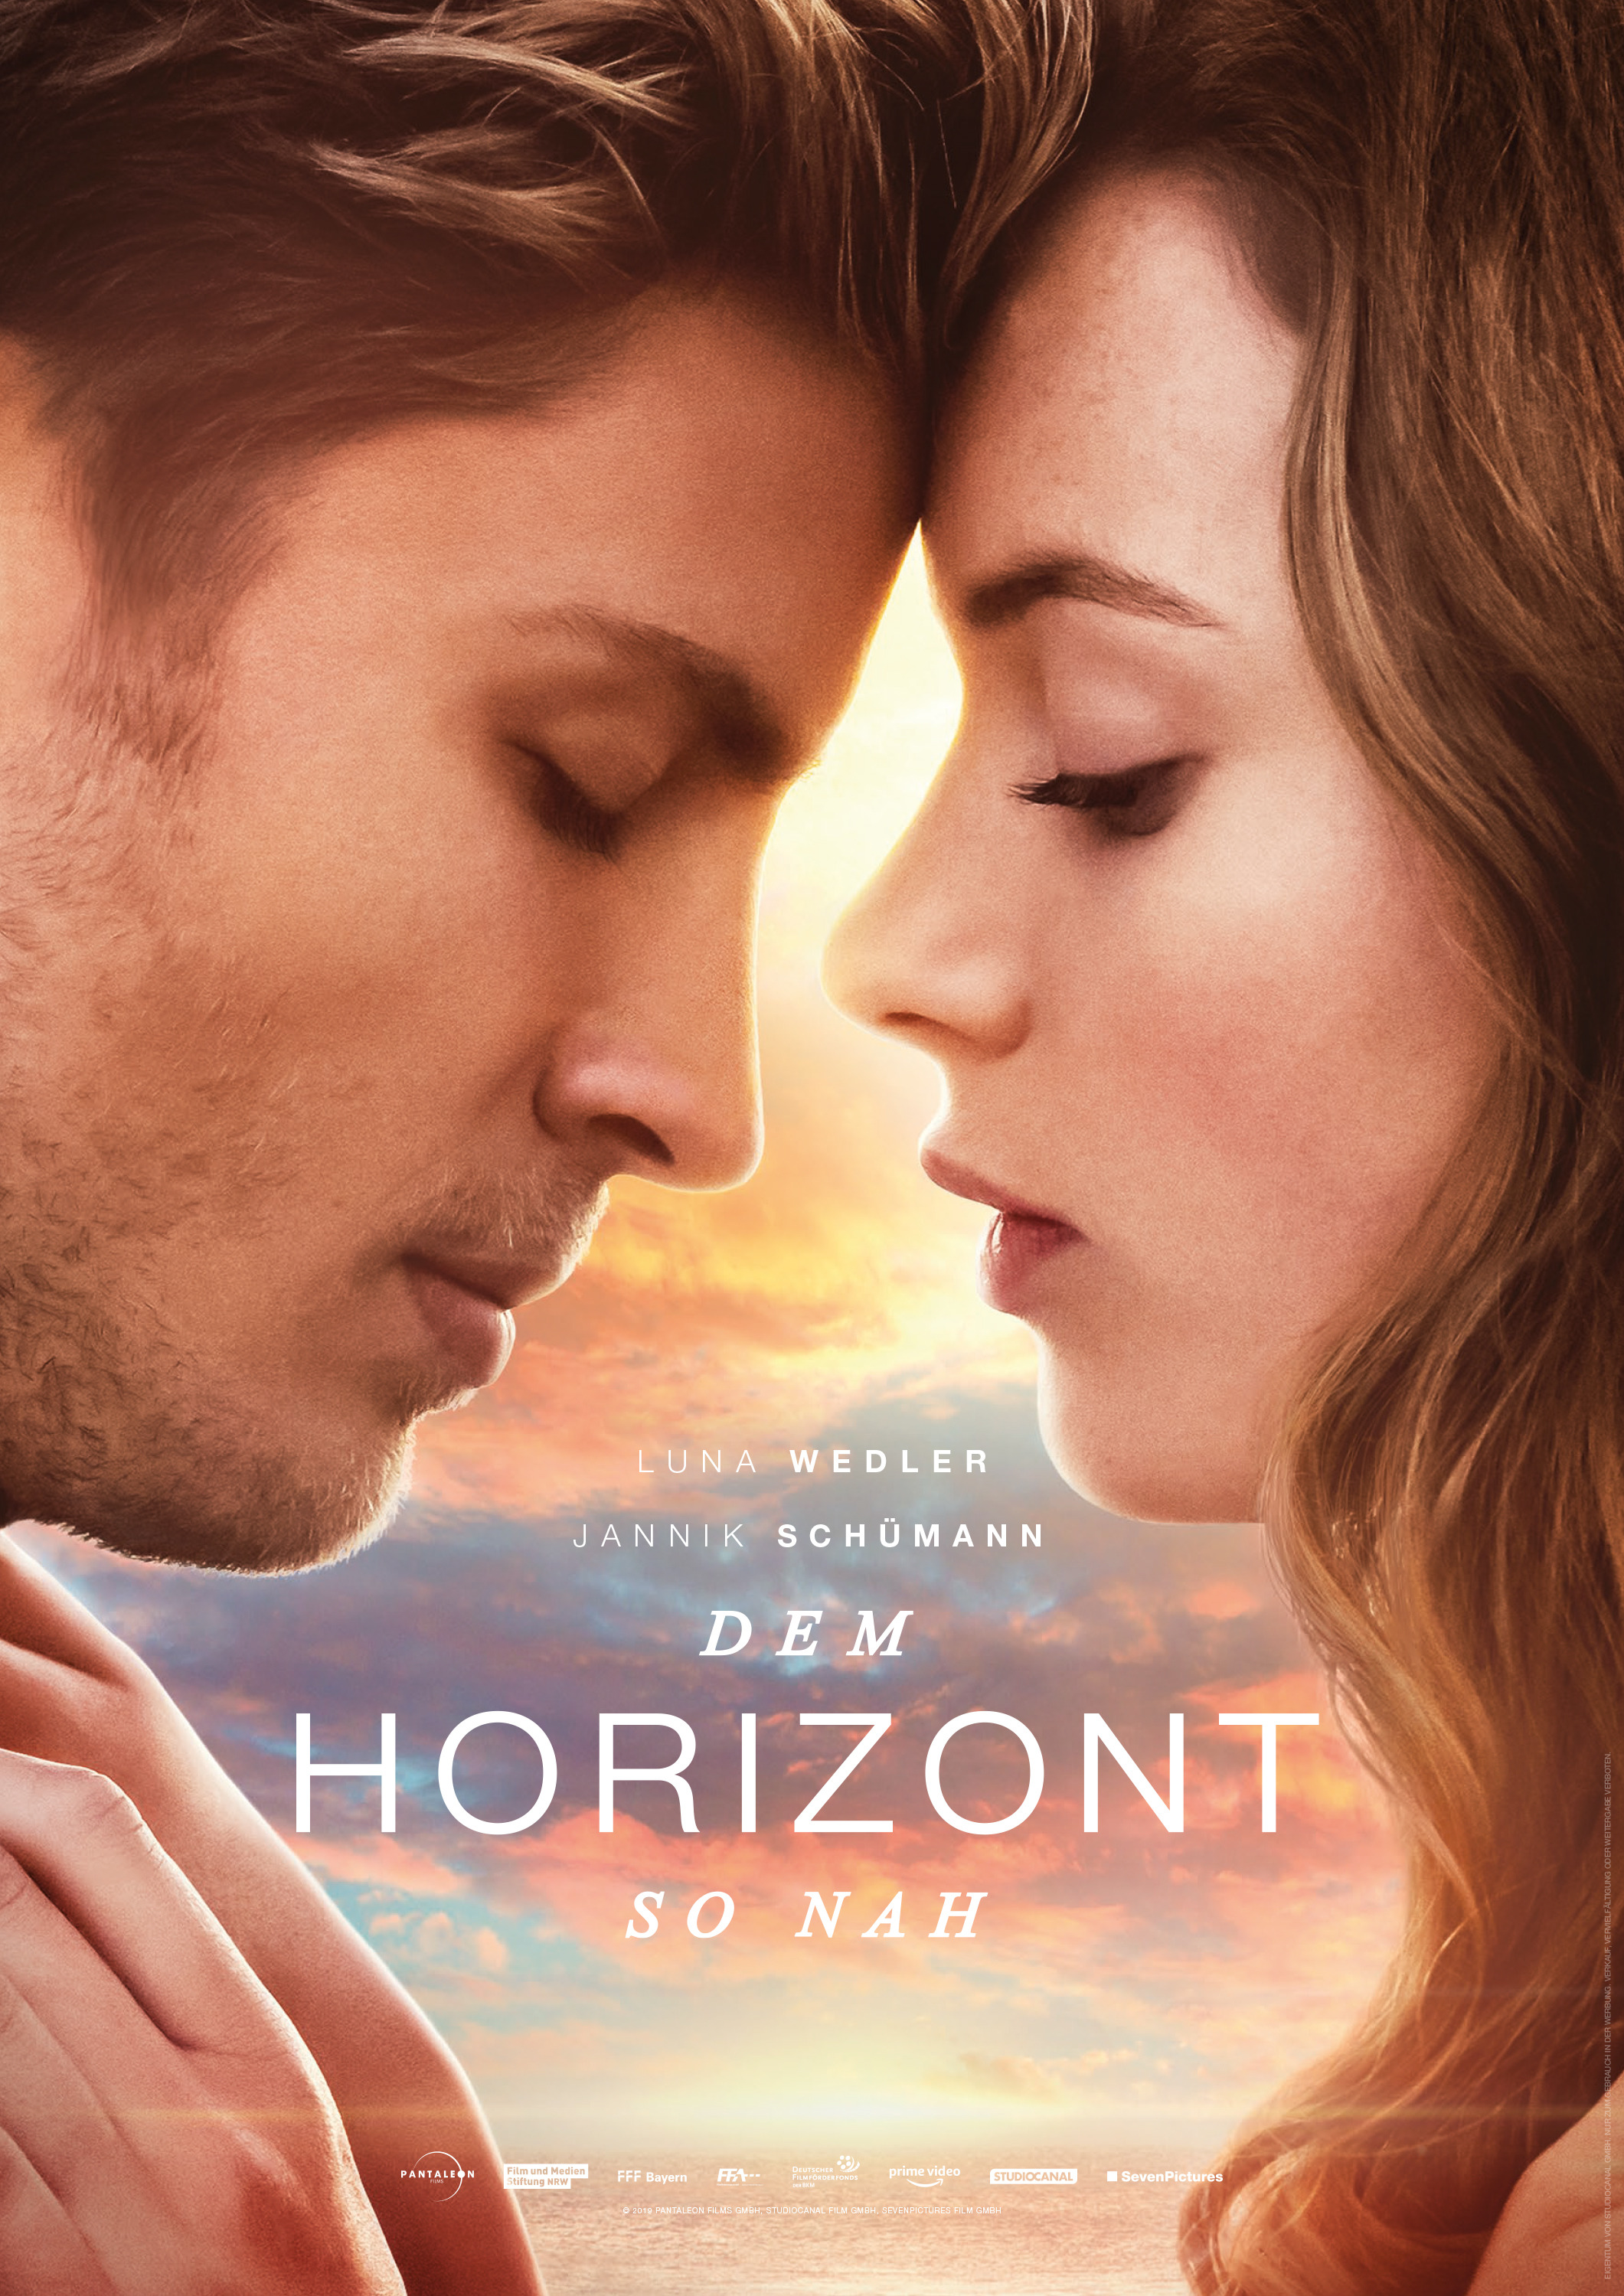 Mega Sized Movie Poster Image for Dem Horizont so nah (#2 of 4)